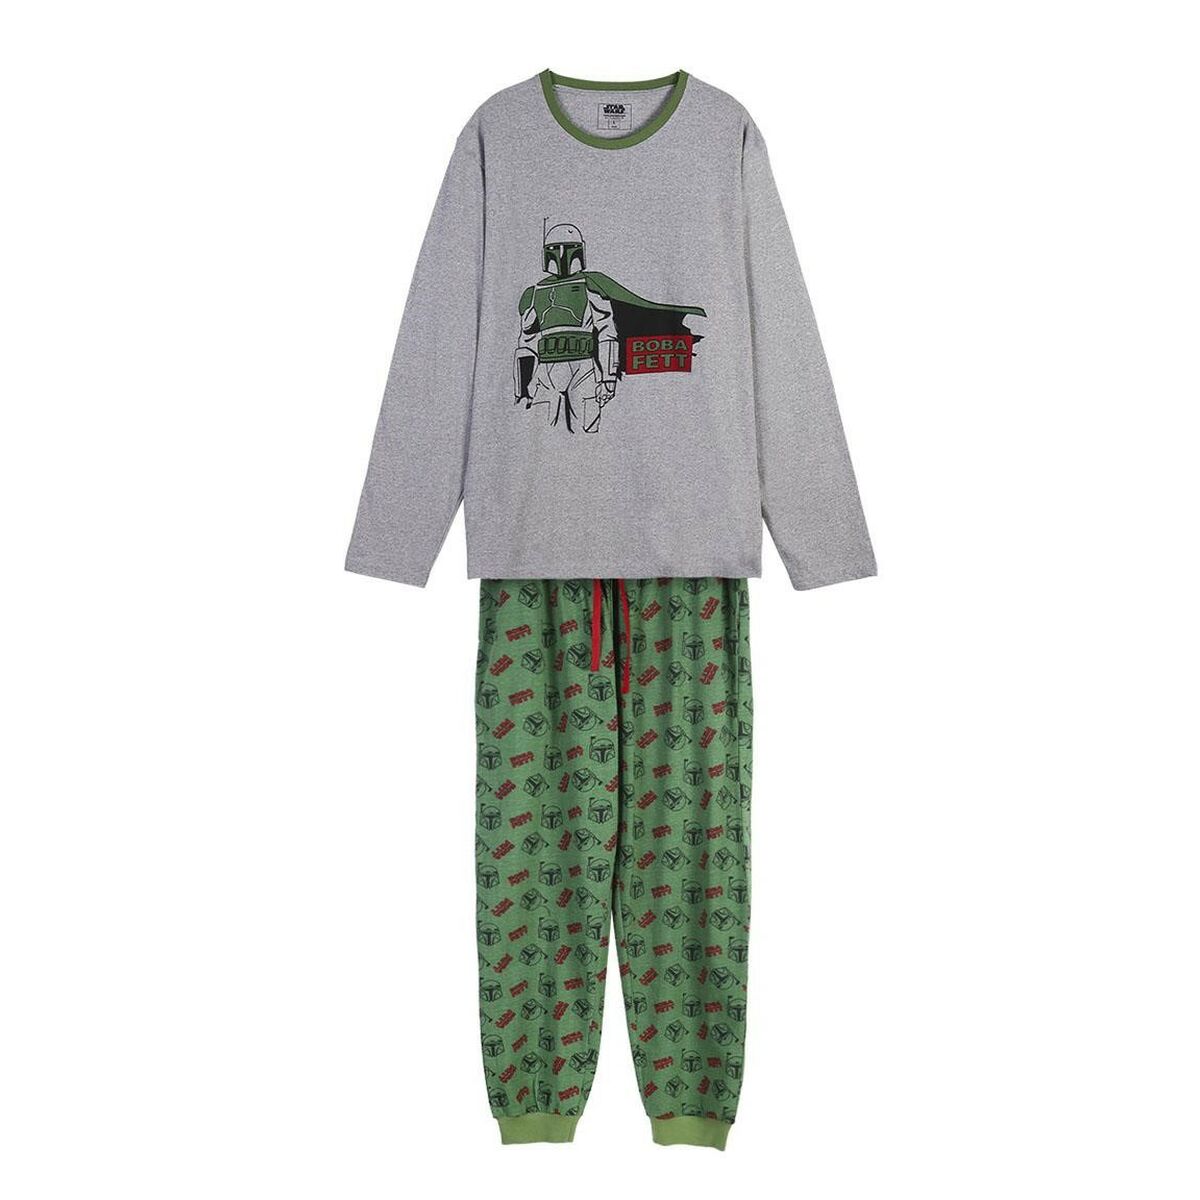 Pyjama Kinderen Boba Fett Grijs Donkergroen